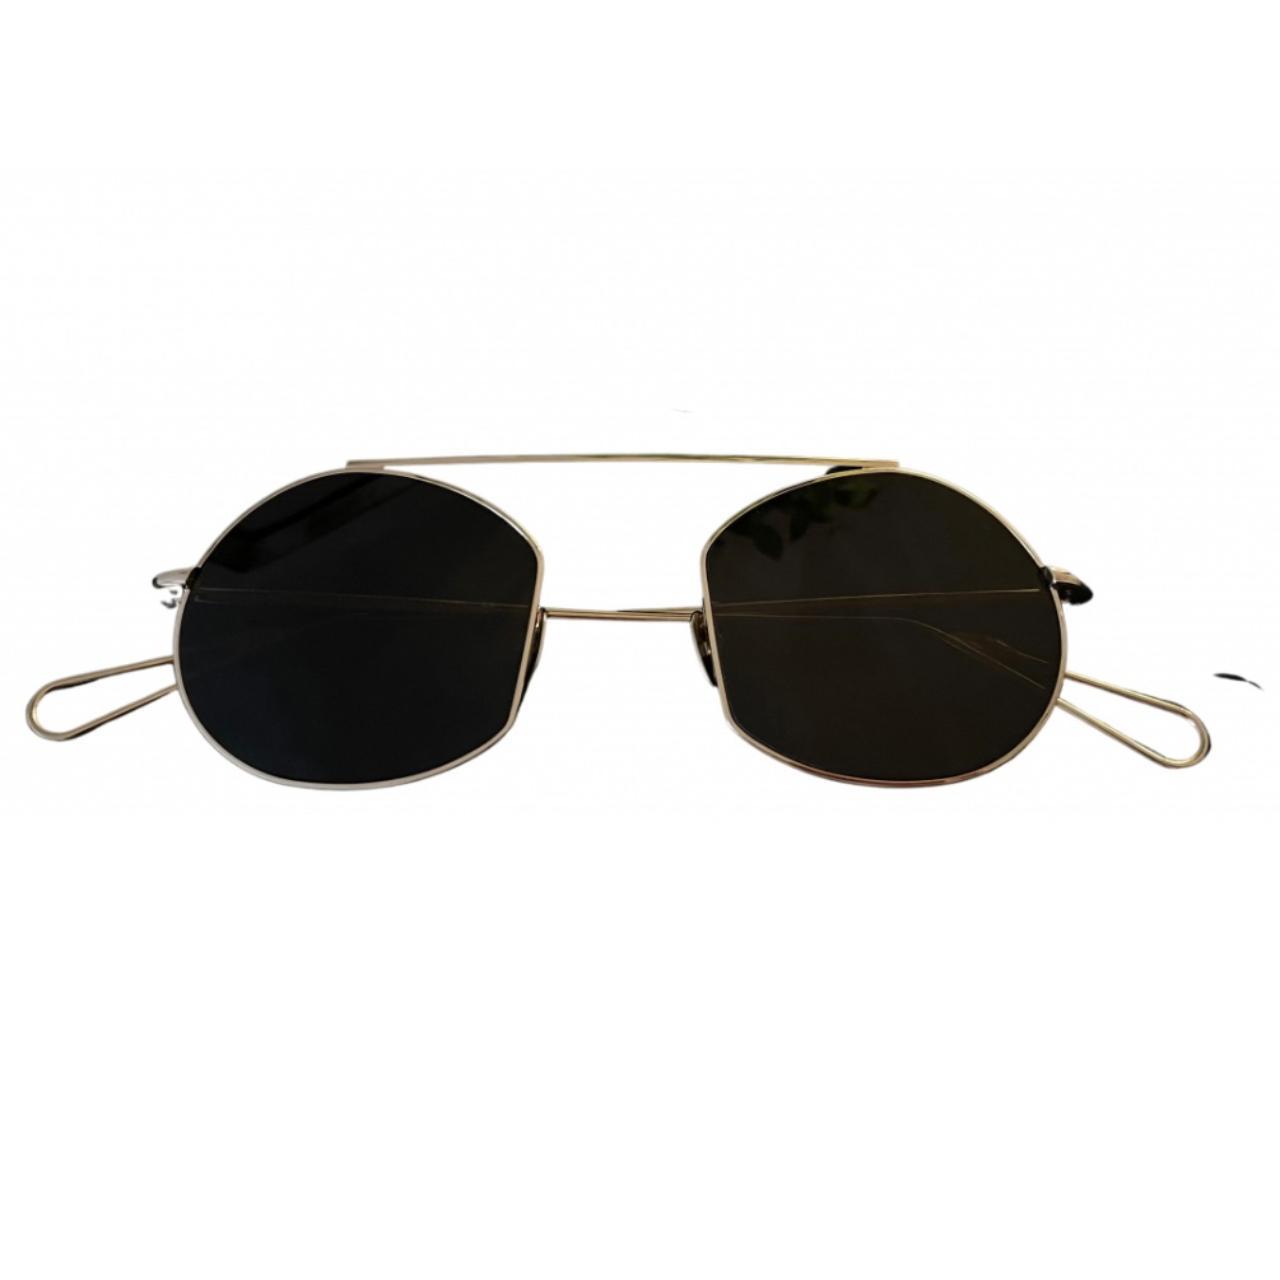 Ahlem Men's Black and Gold Sunglasses